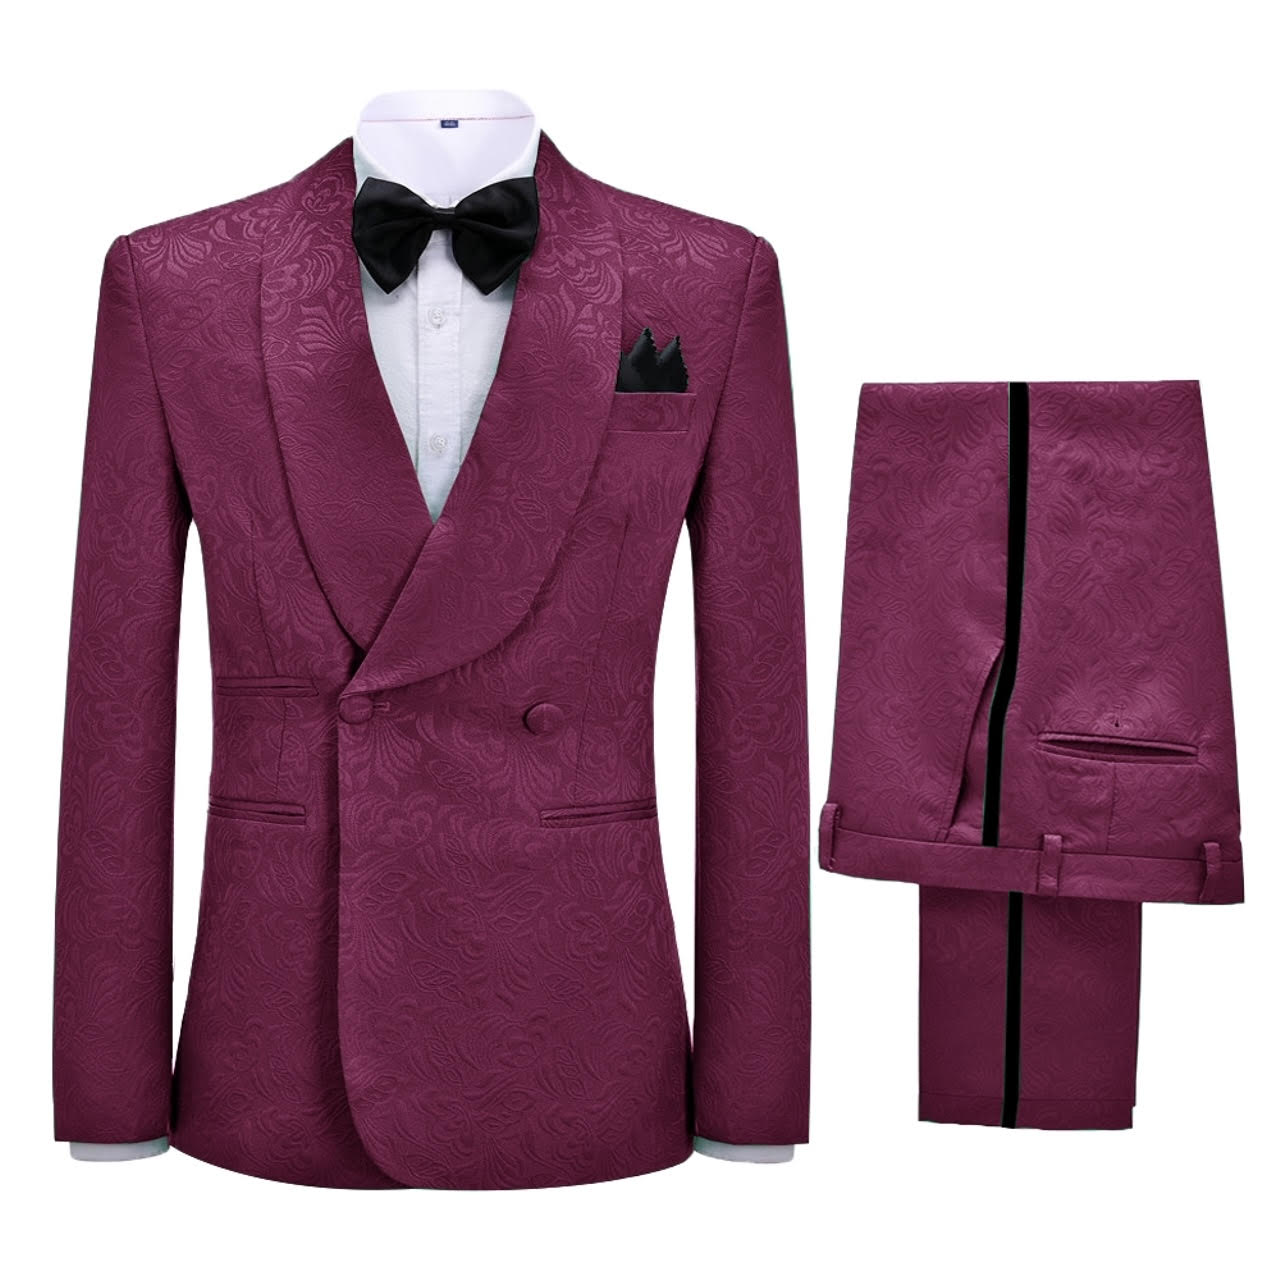 Tuxedo # 430 - The Gentlemens Closet